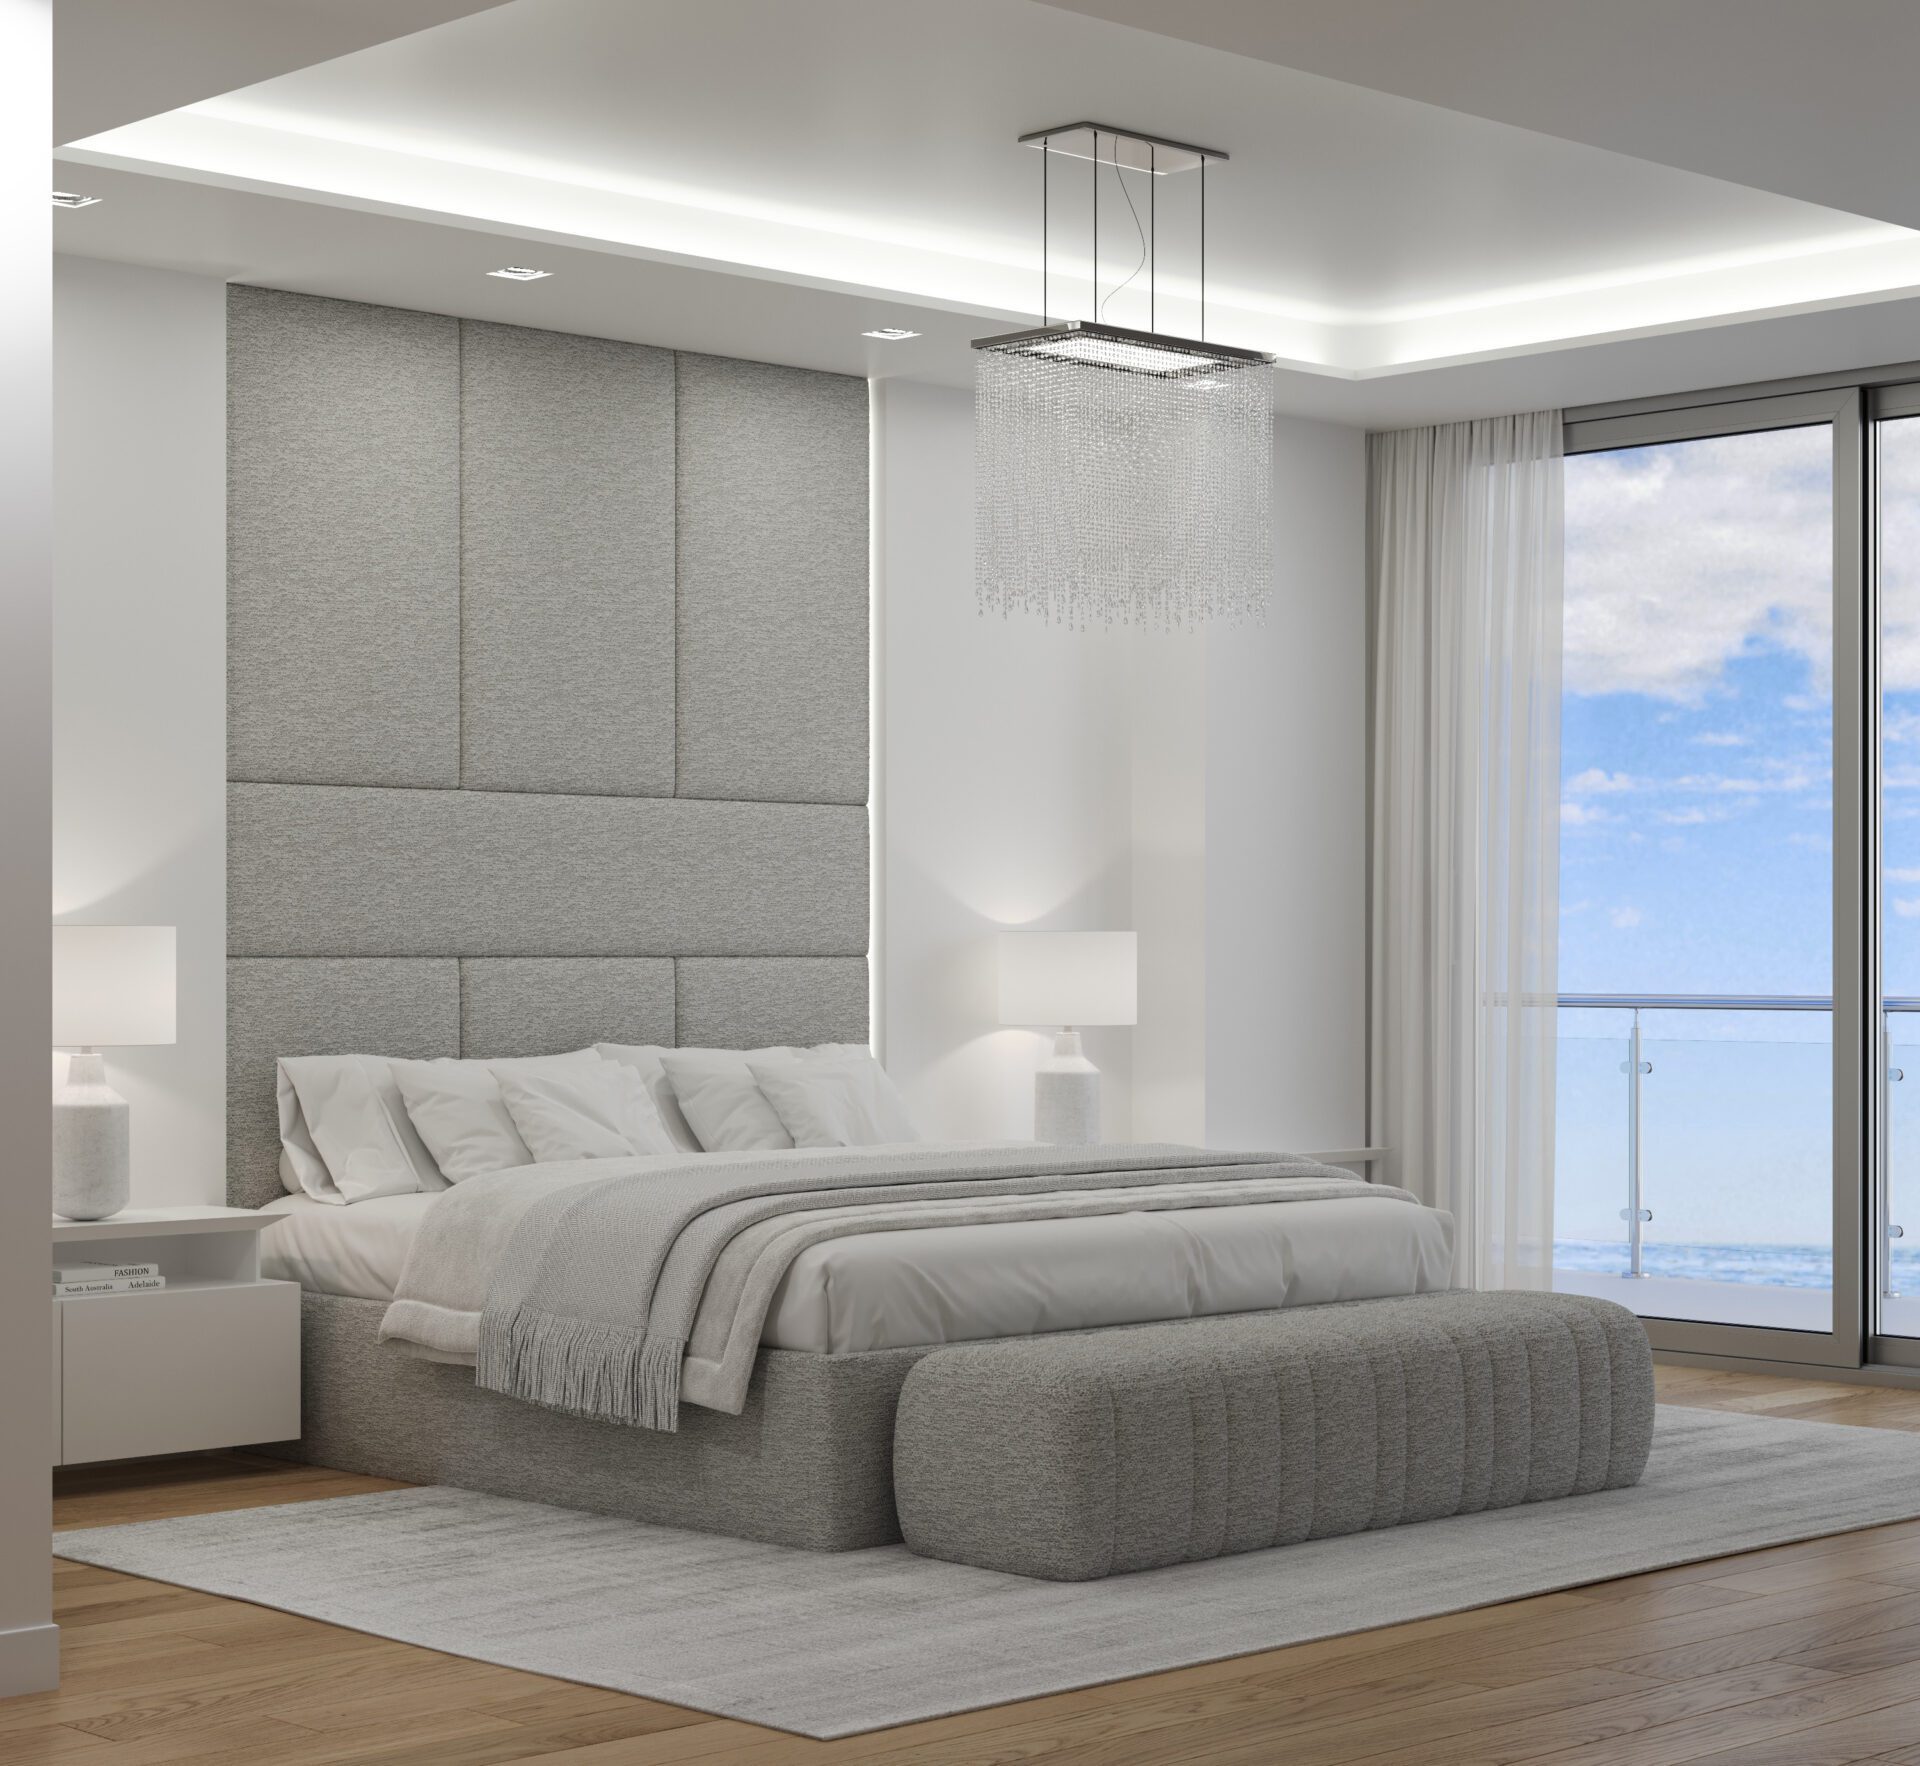 FELIX - Upholstered Wall Mounted Headboard & Bed, Luxury Furniture - Blend Home Furnishings